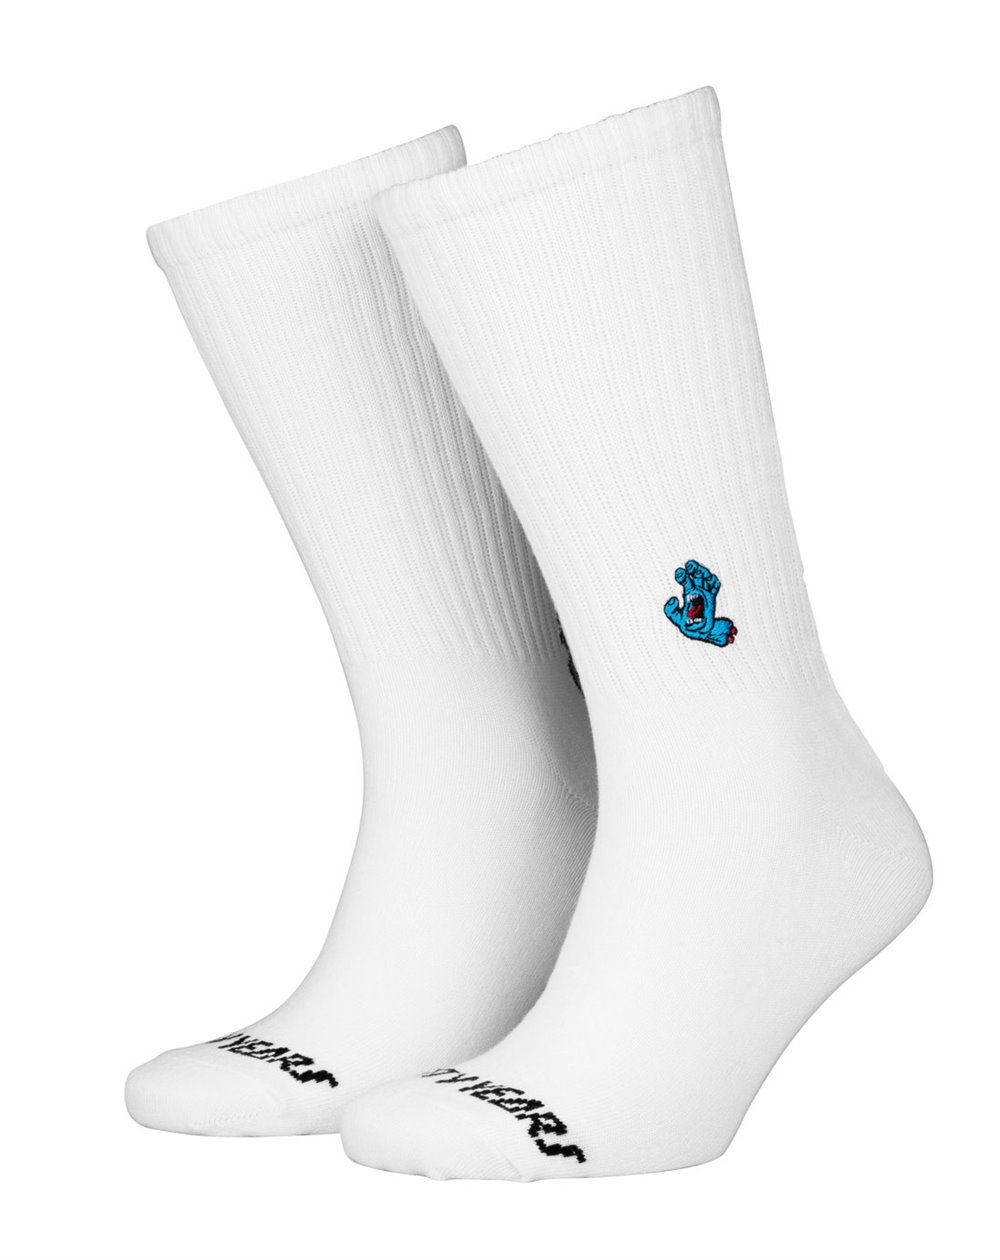 Santa Cruz Herren Skate-Socken Screaming 50 White